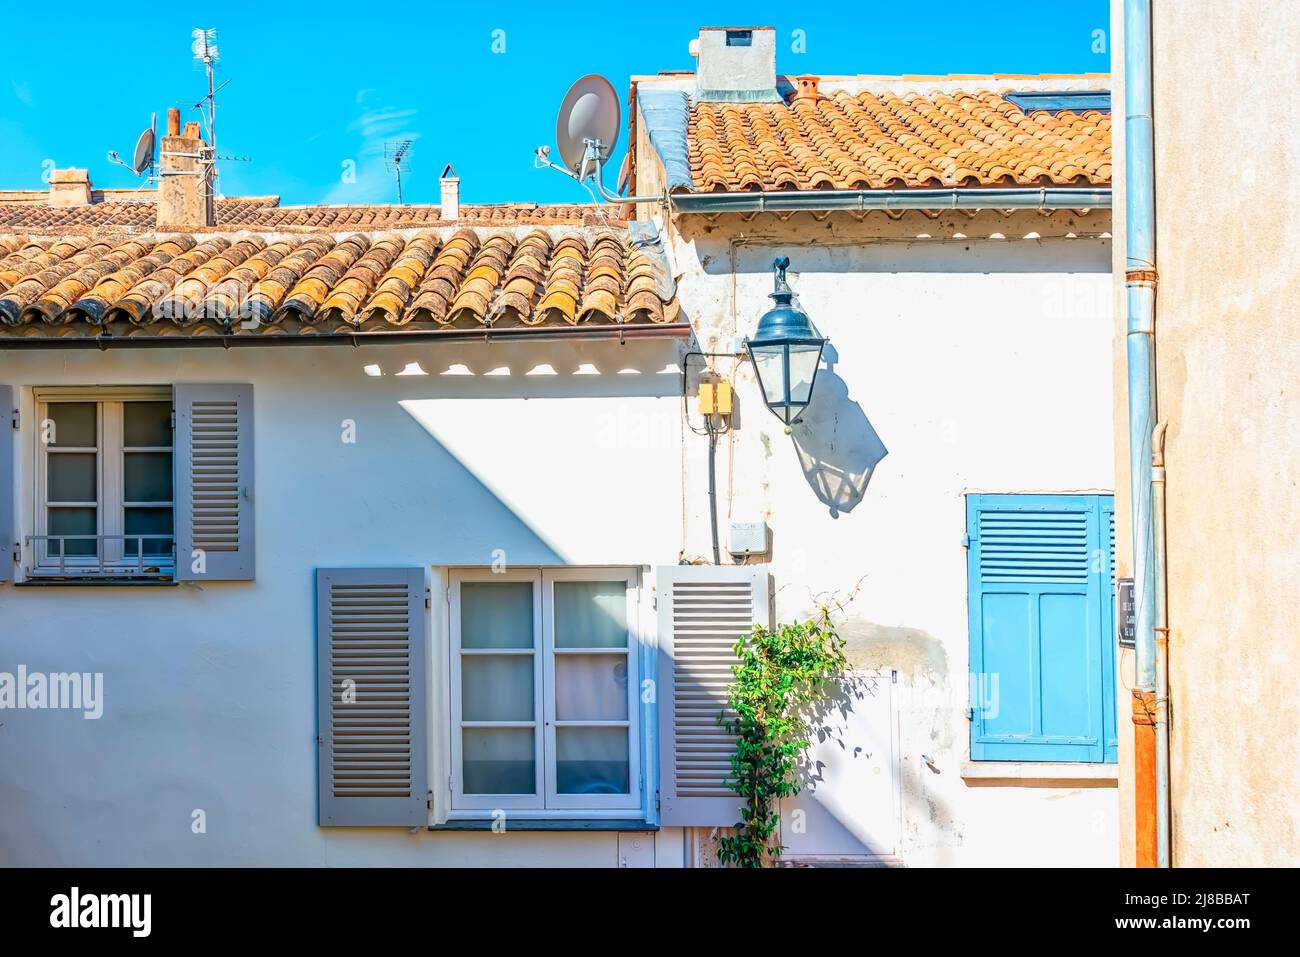 Architecture in St Tropez village, France Stock Photo